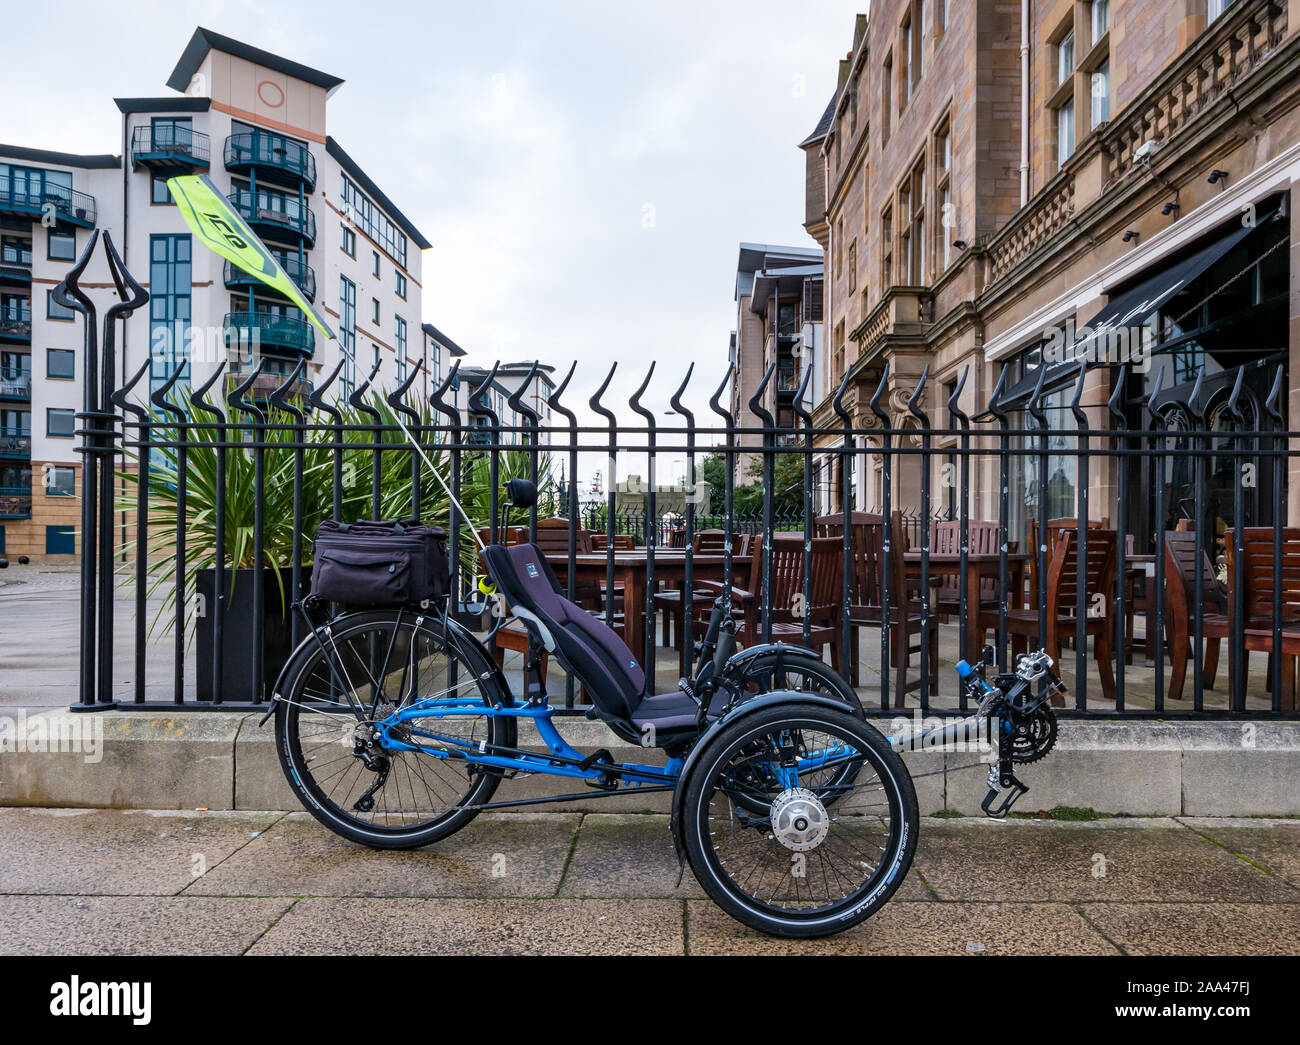 Bicicleta reclinada aparcada por barandillas, Chez mal. Brasserie, Malmaison, Tower Place, la orilla, Leith, Edimburgo, Escocia, Reino Unido Foto de stock